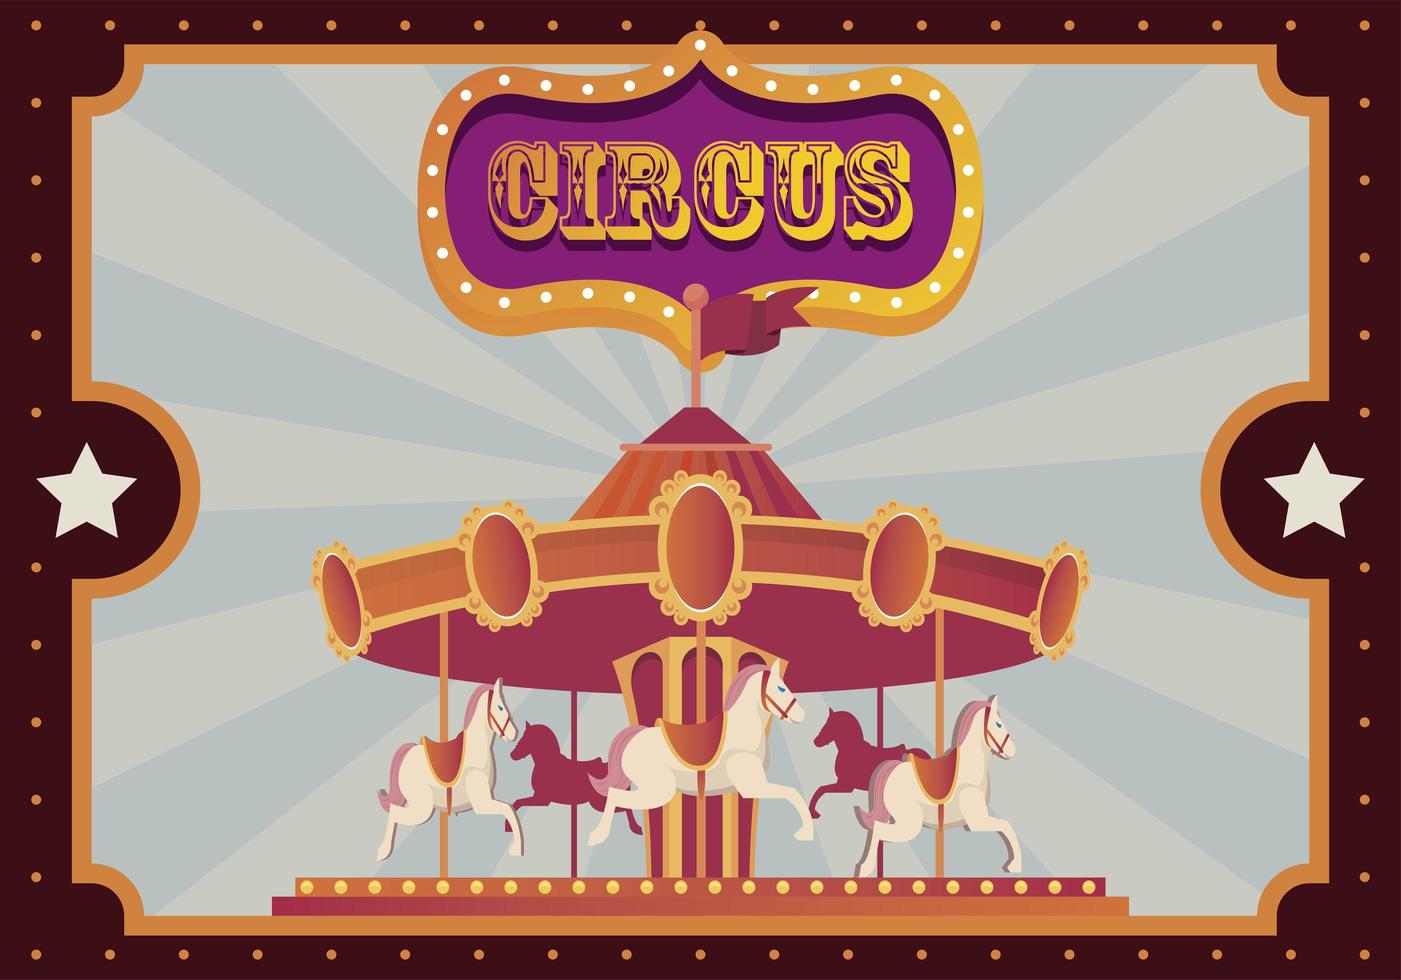 festival fairground carousel with banner vector